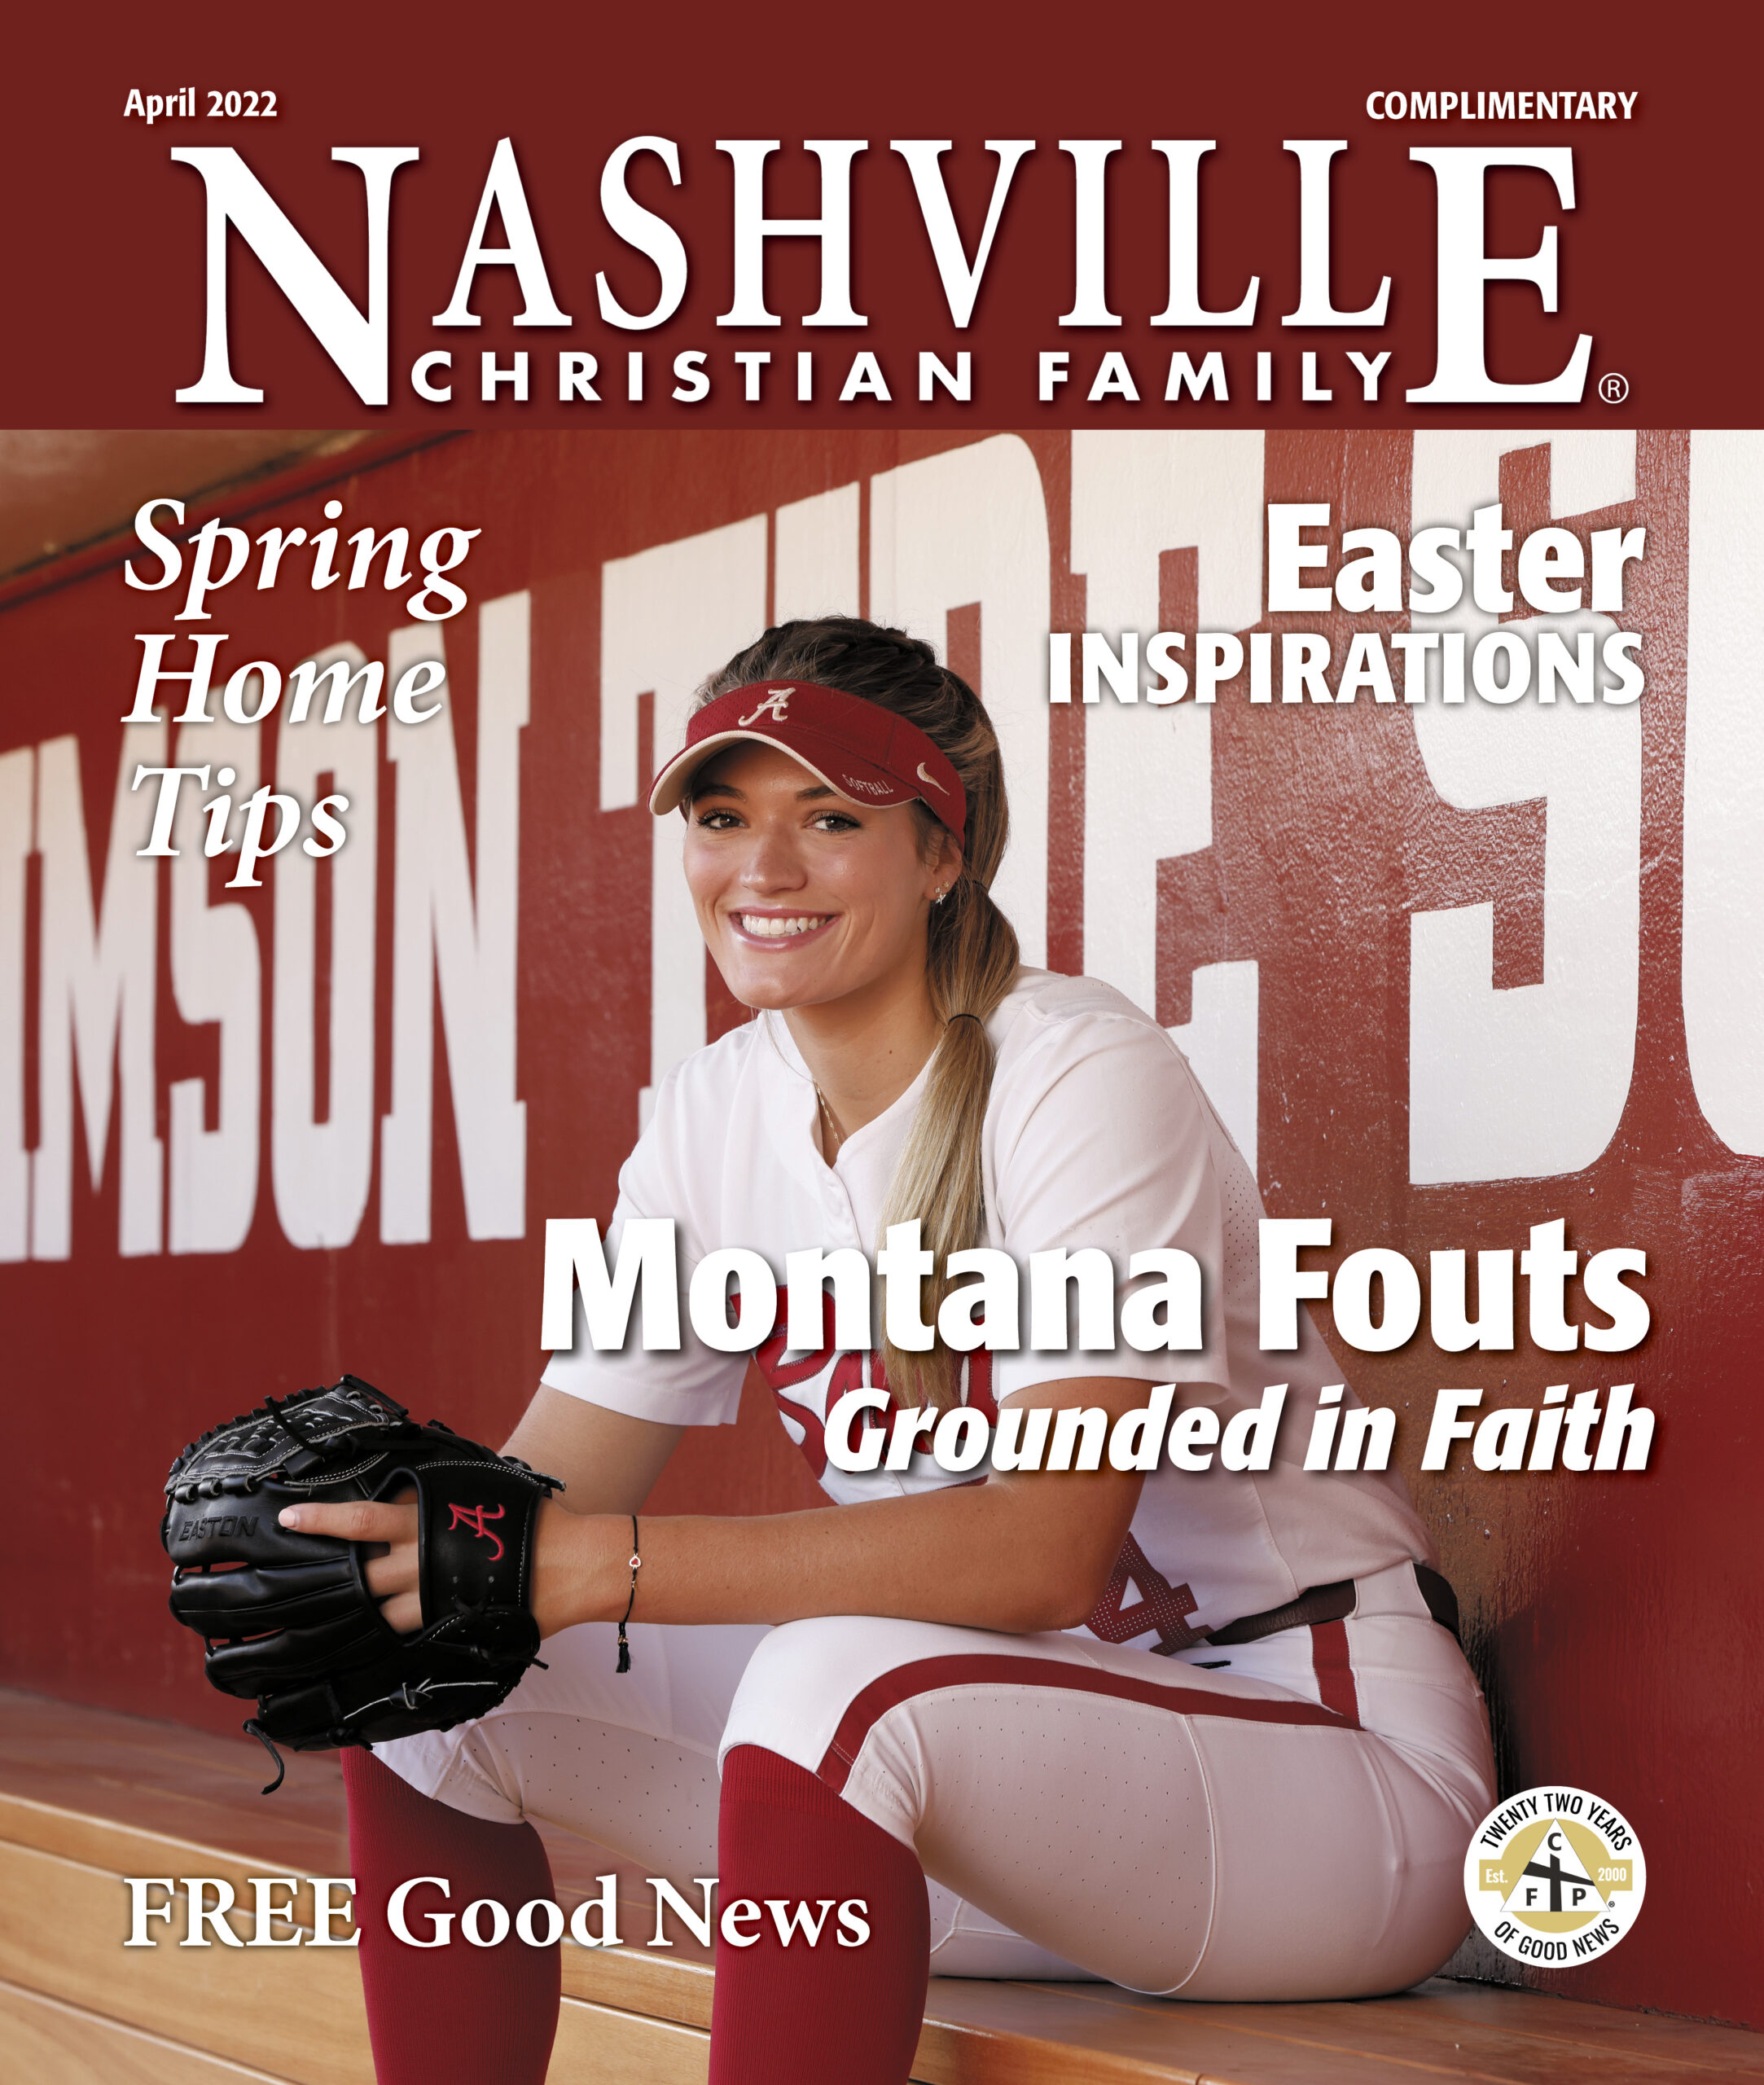 April 2022 Cover artwork featuring Montana Fouts | April 2022 Issue - Free Christian Lifestyle Magazine | Nashville Christian Family Magazine